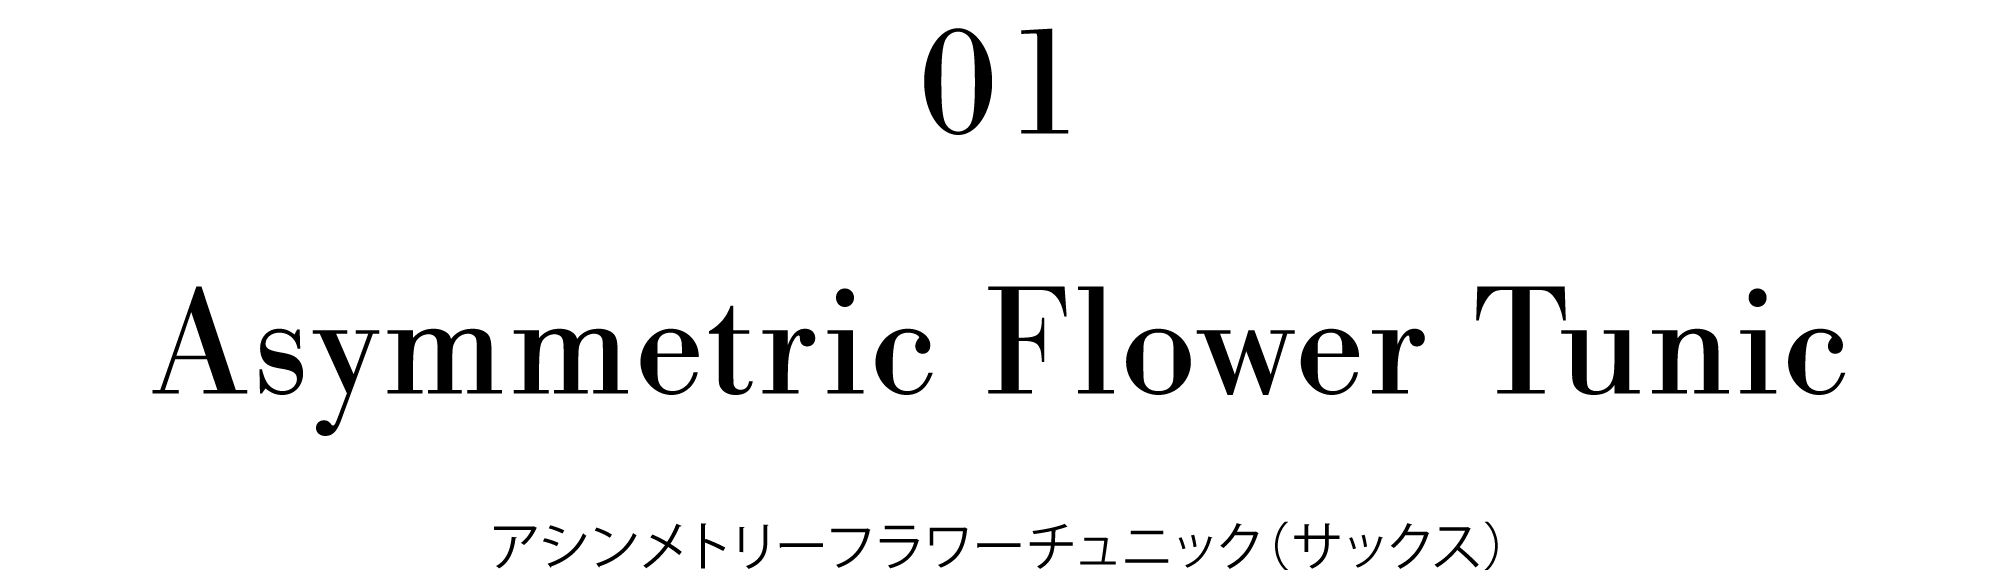 01 Asymmetric Flower Tunik